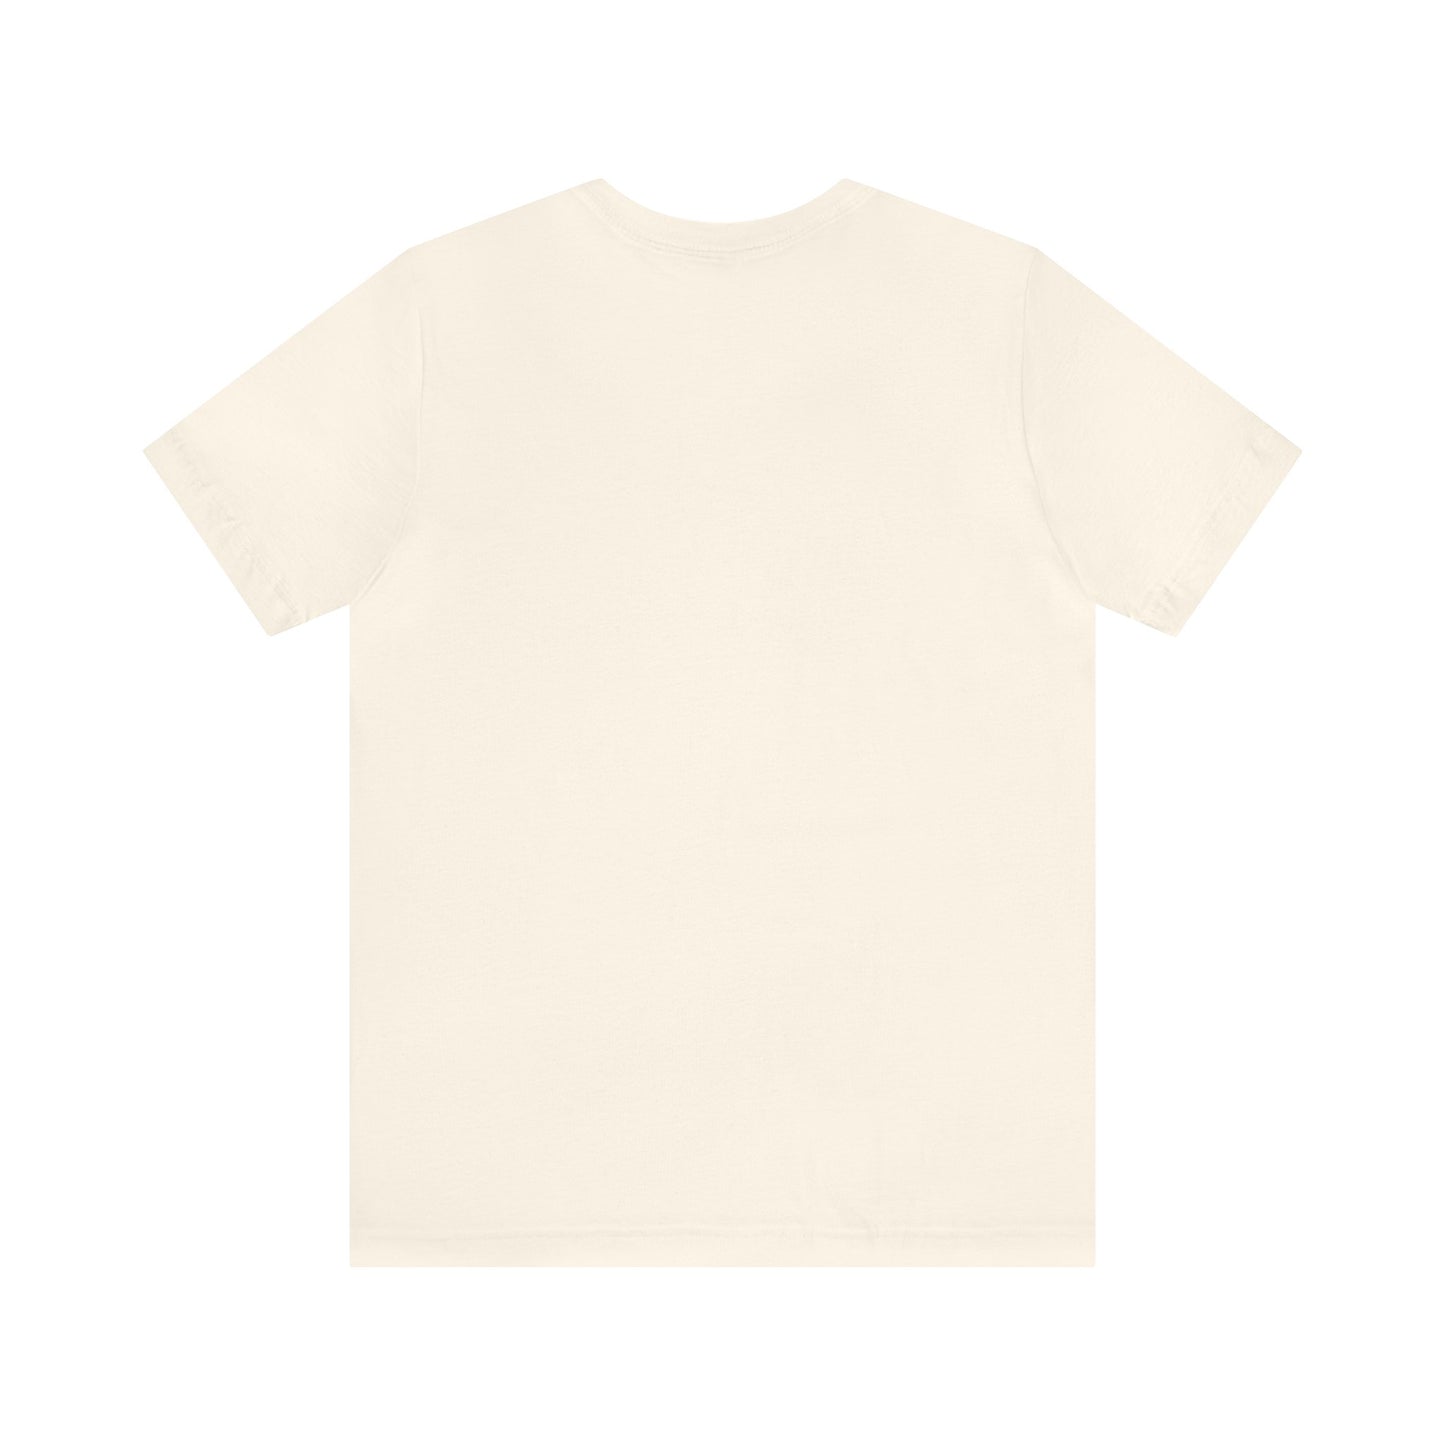 Copy of Swearing Dressage Shirt Watercolor Art Unisex Jersey Short Sleeve Tee